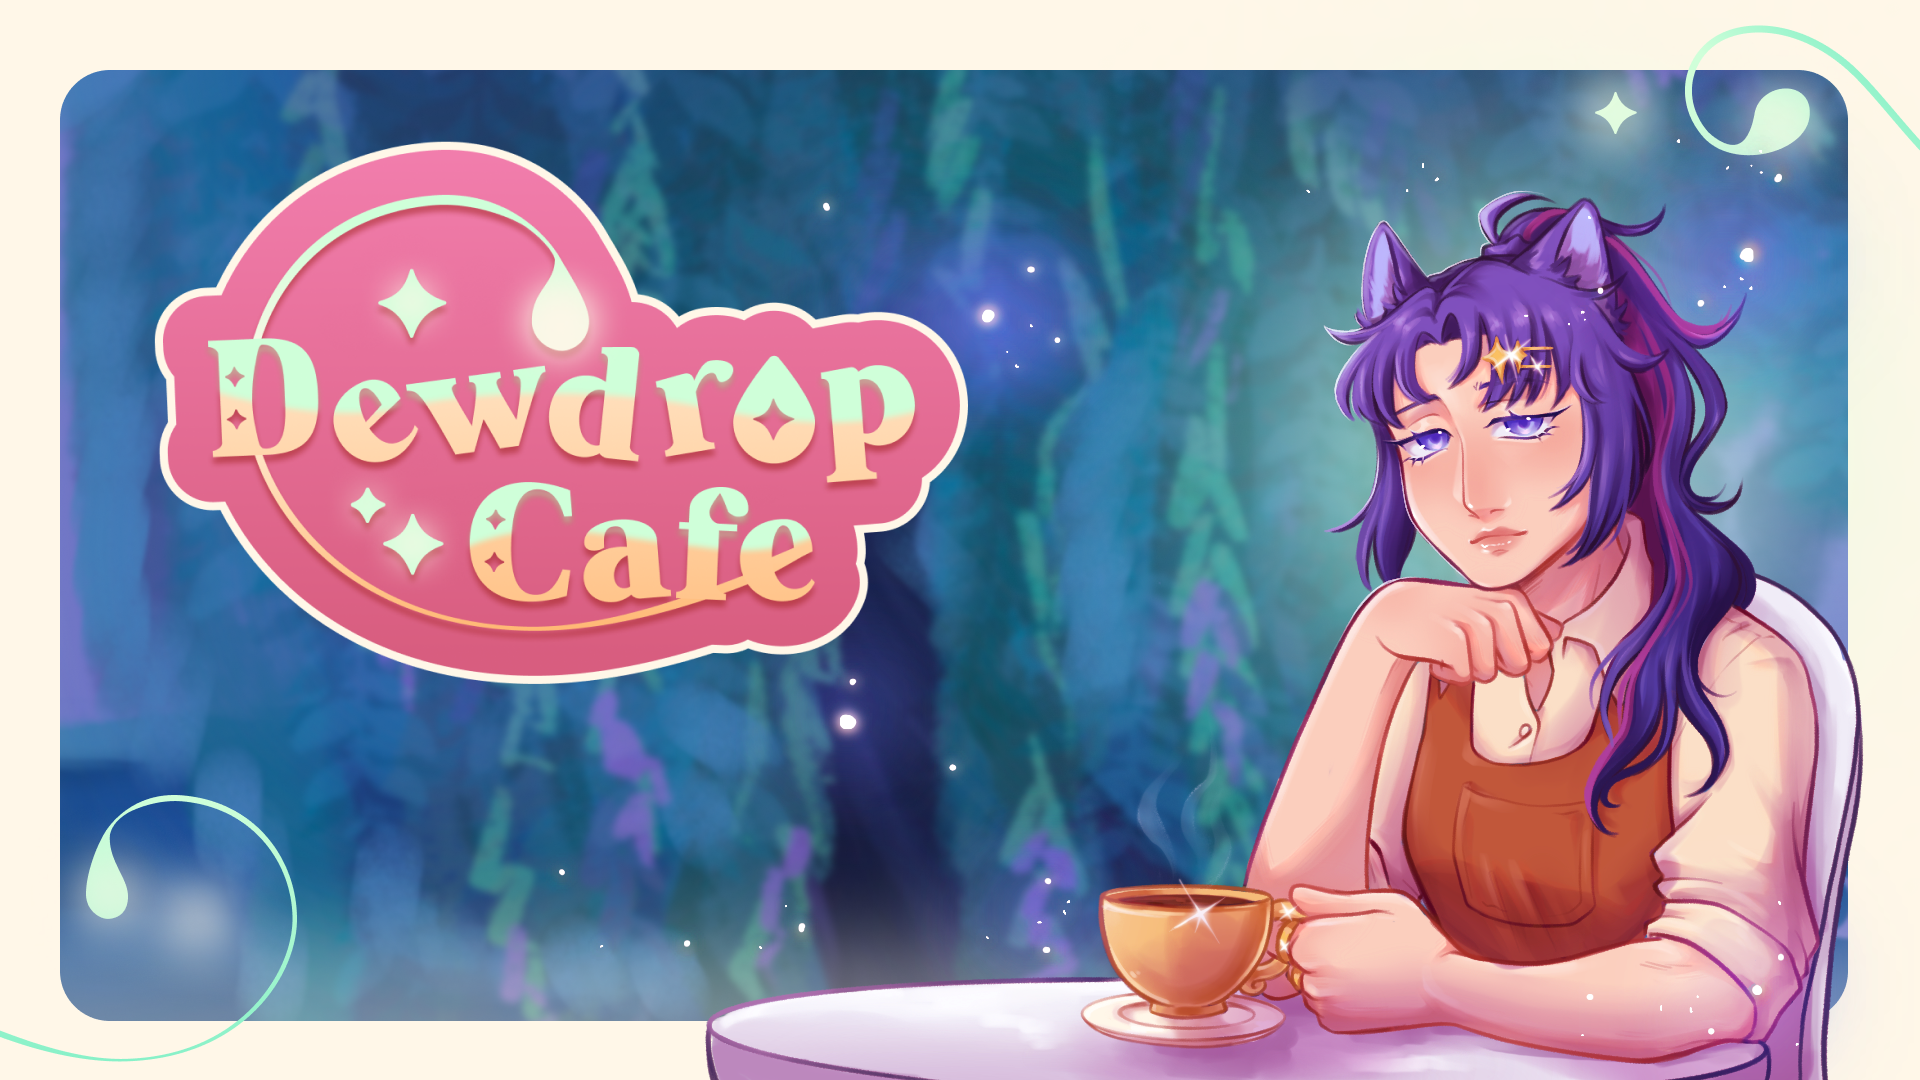 Dewdrop Cafe